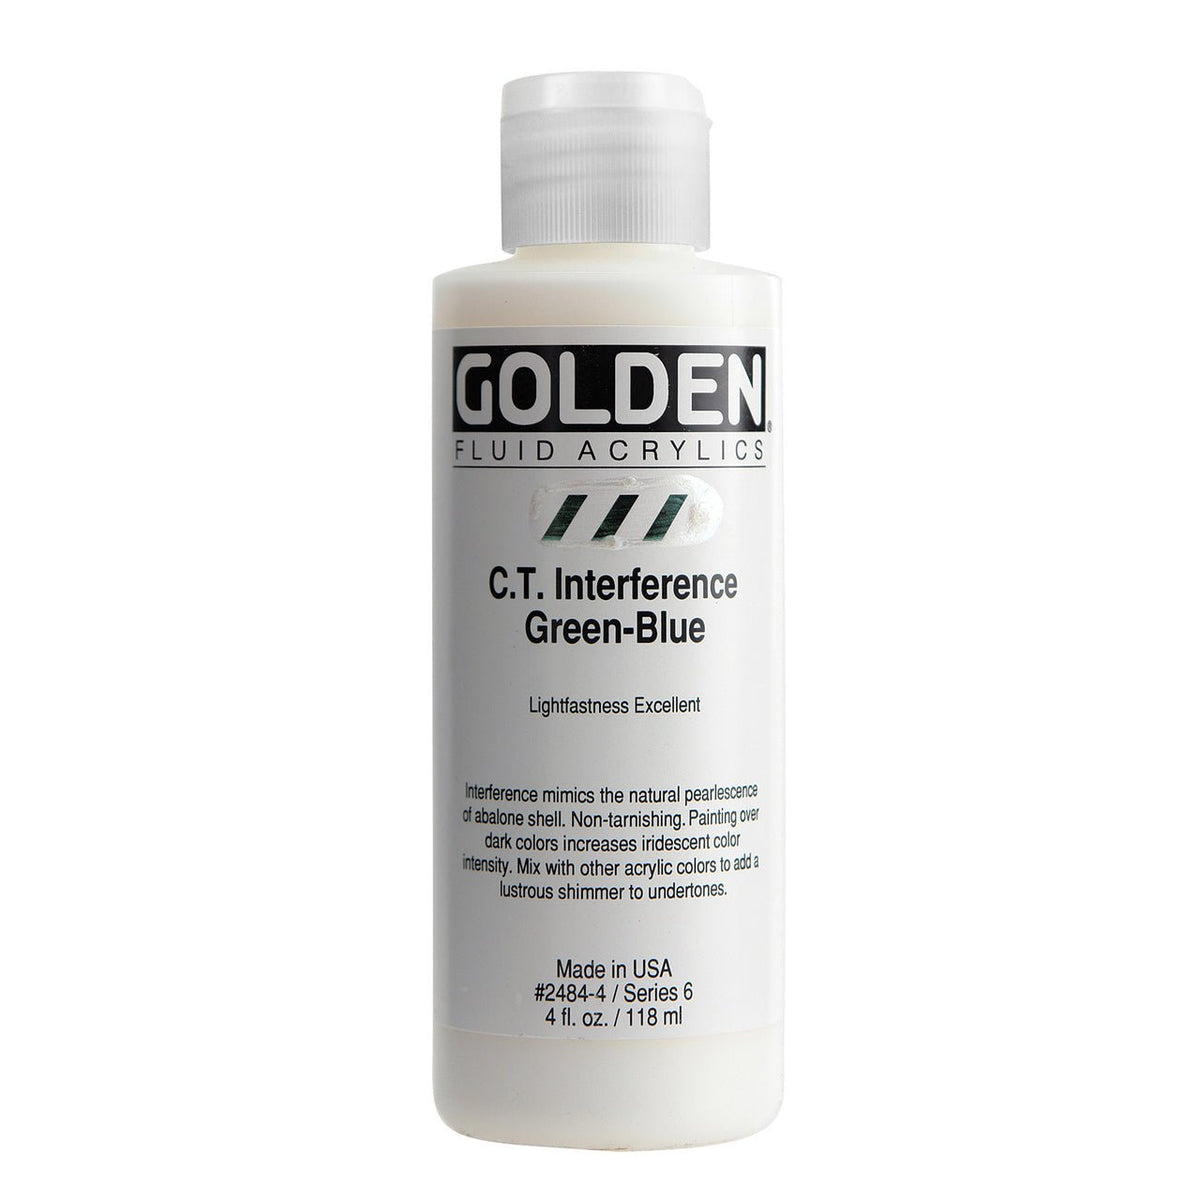 Golden Fluid Acrylic Interference C.T. Green-Blue 4 oz - merriartist.com